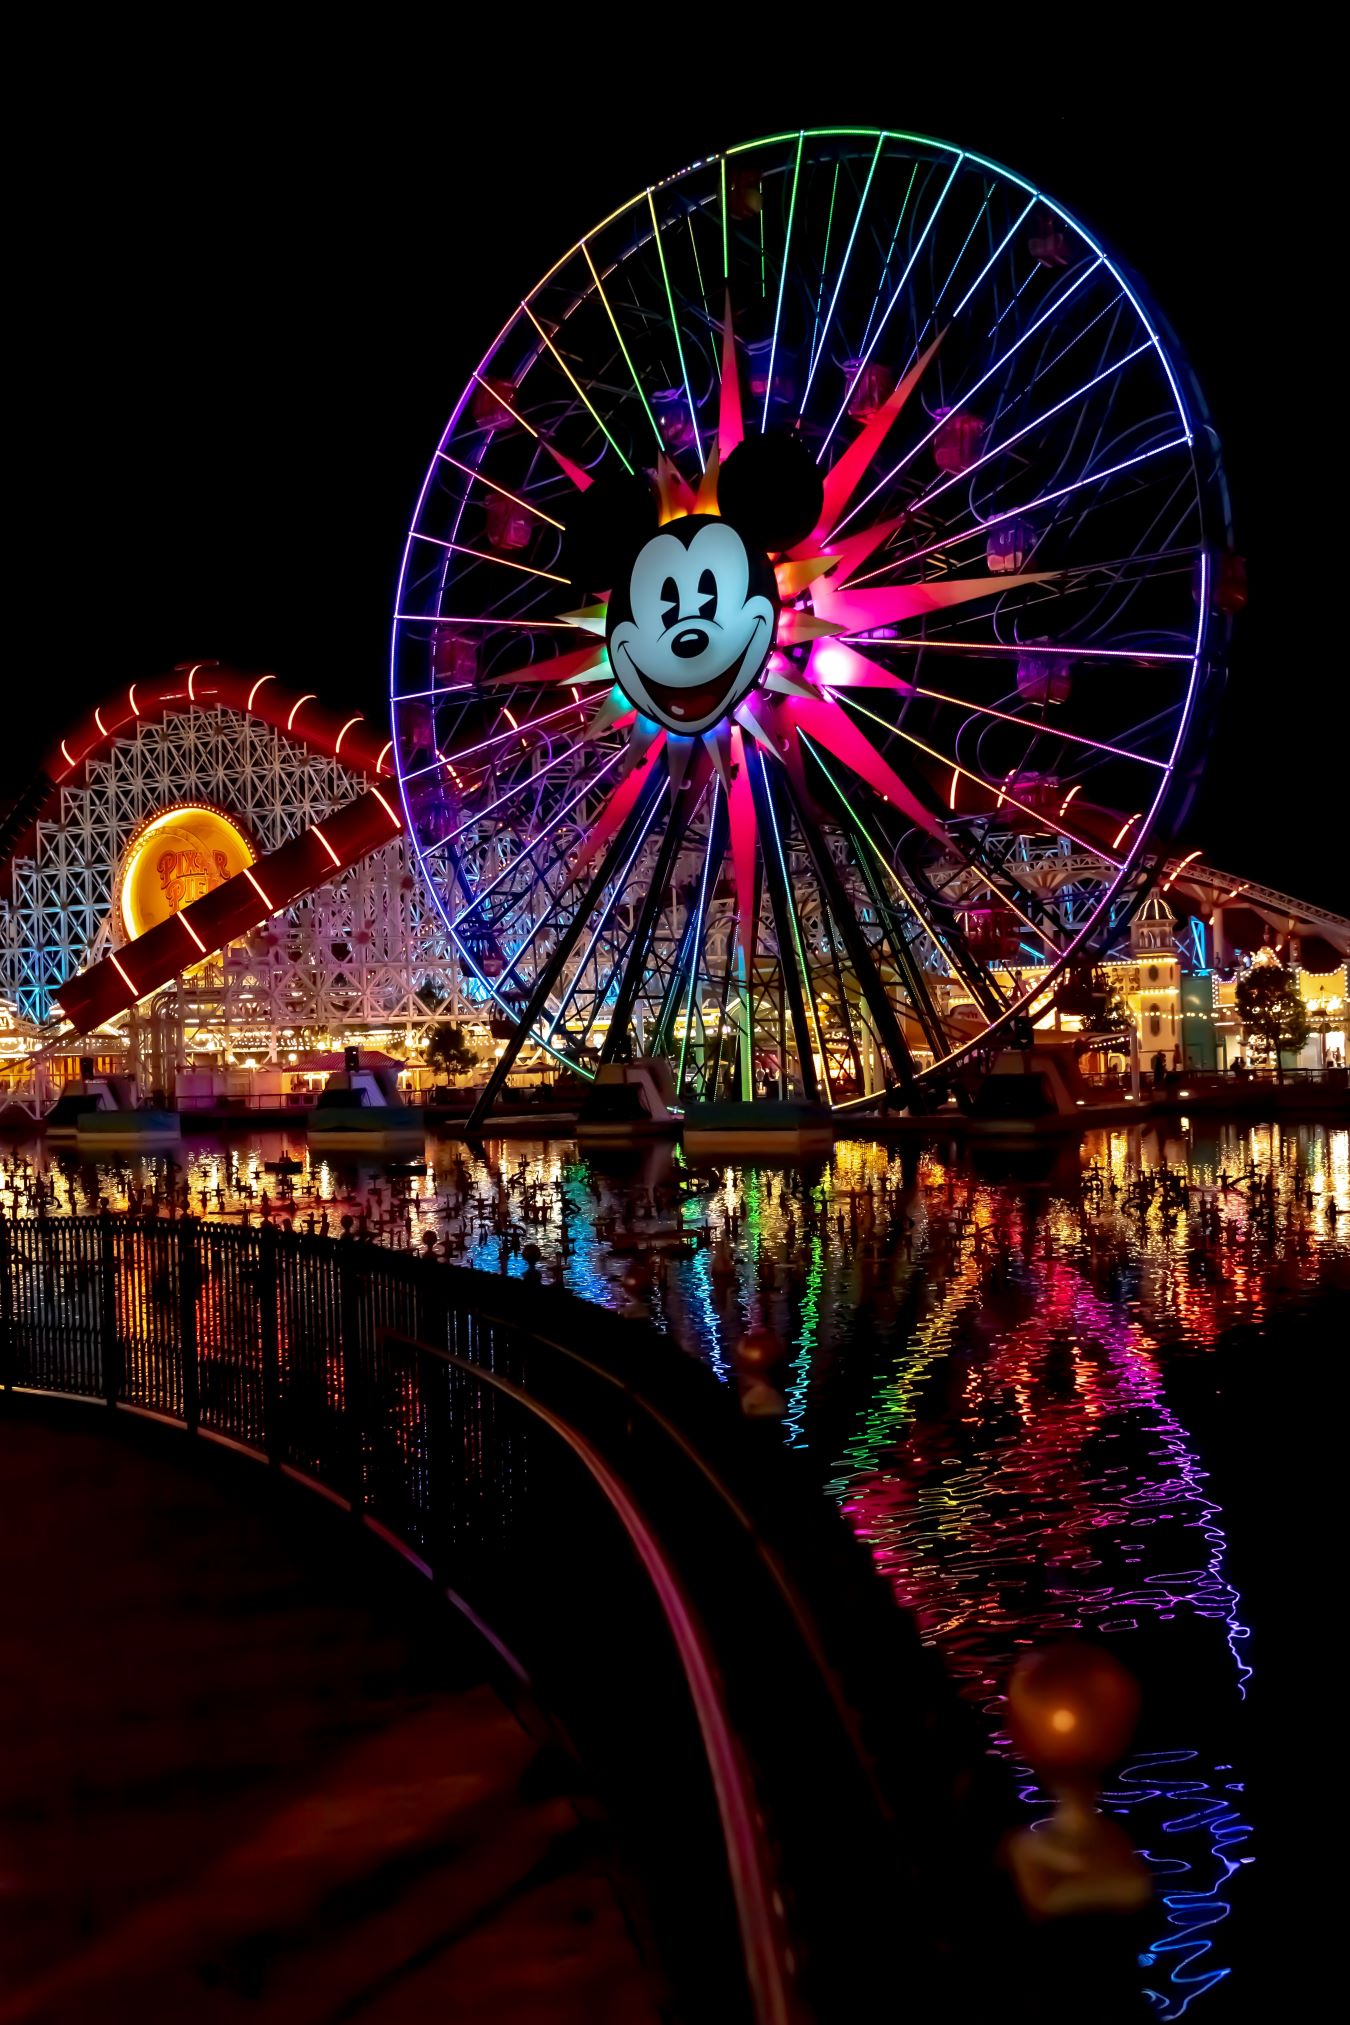 An image of the Mickey Ferris Wheel at Disneyland.